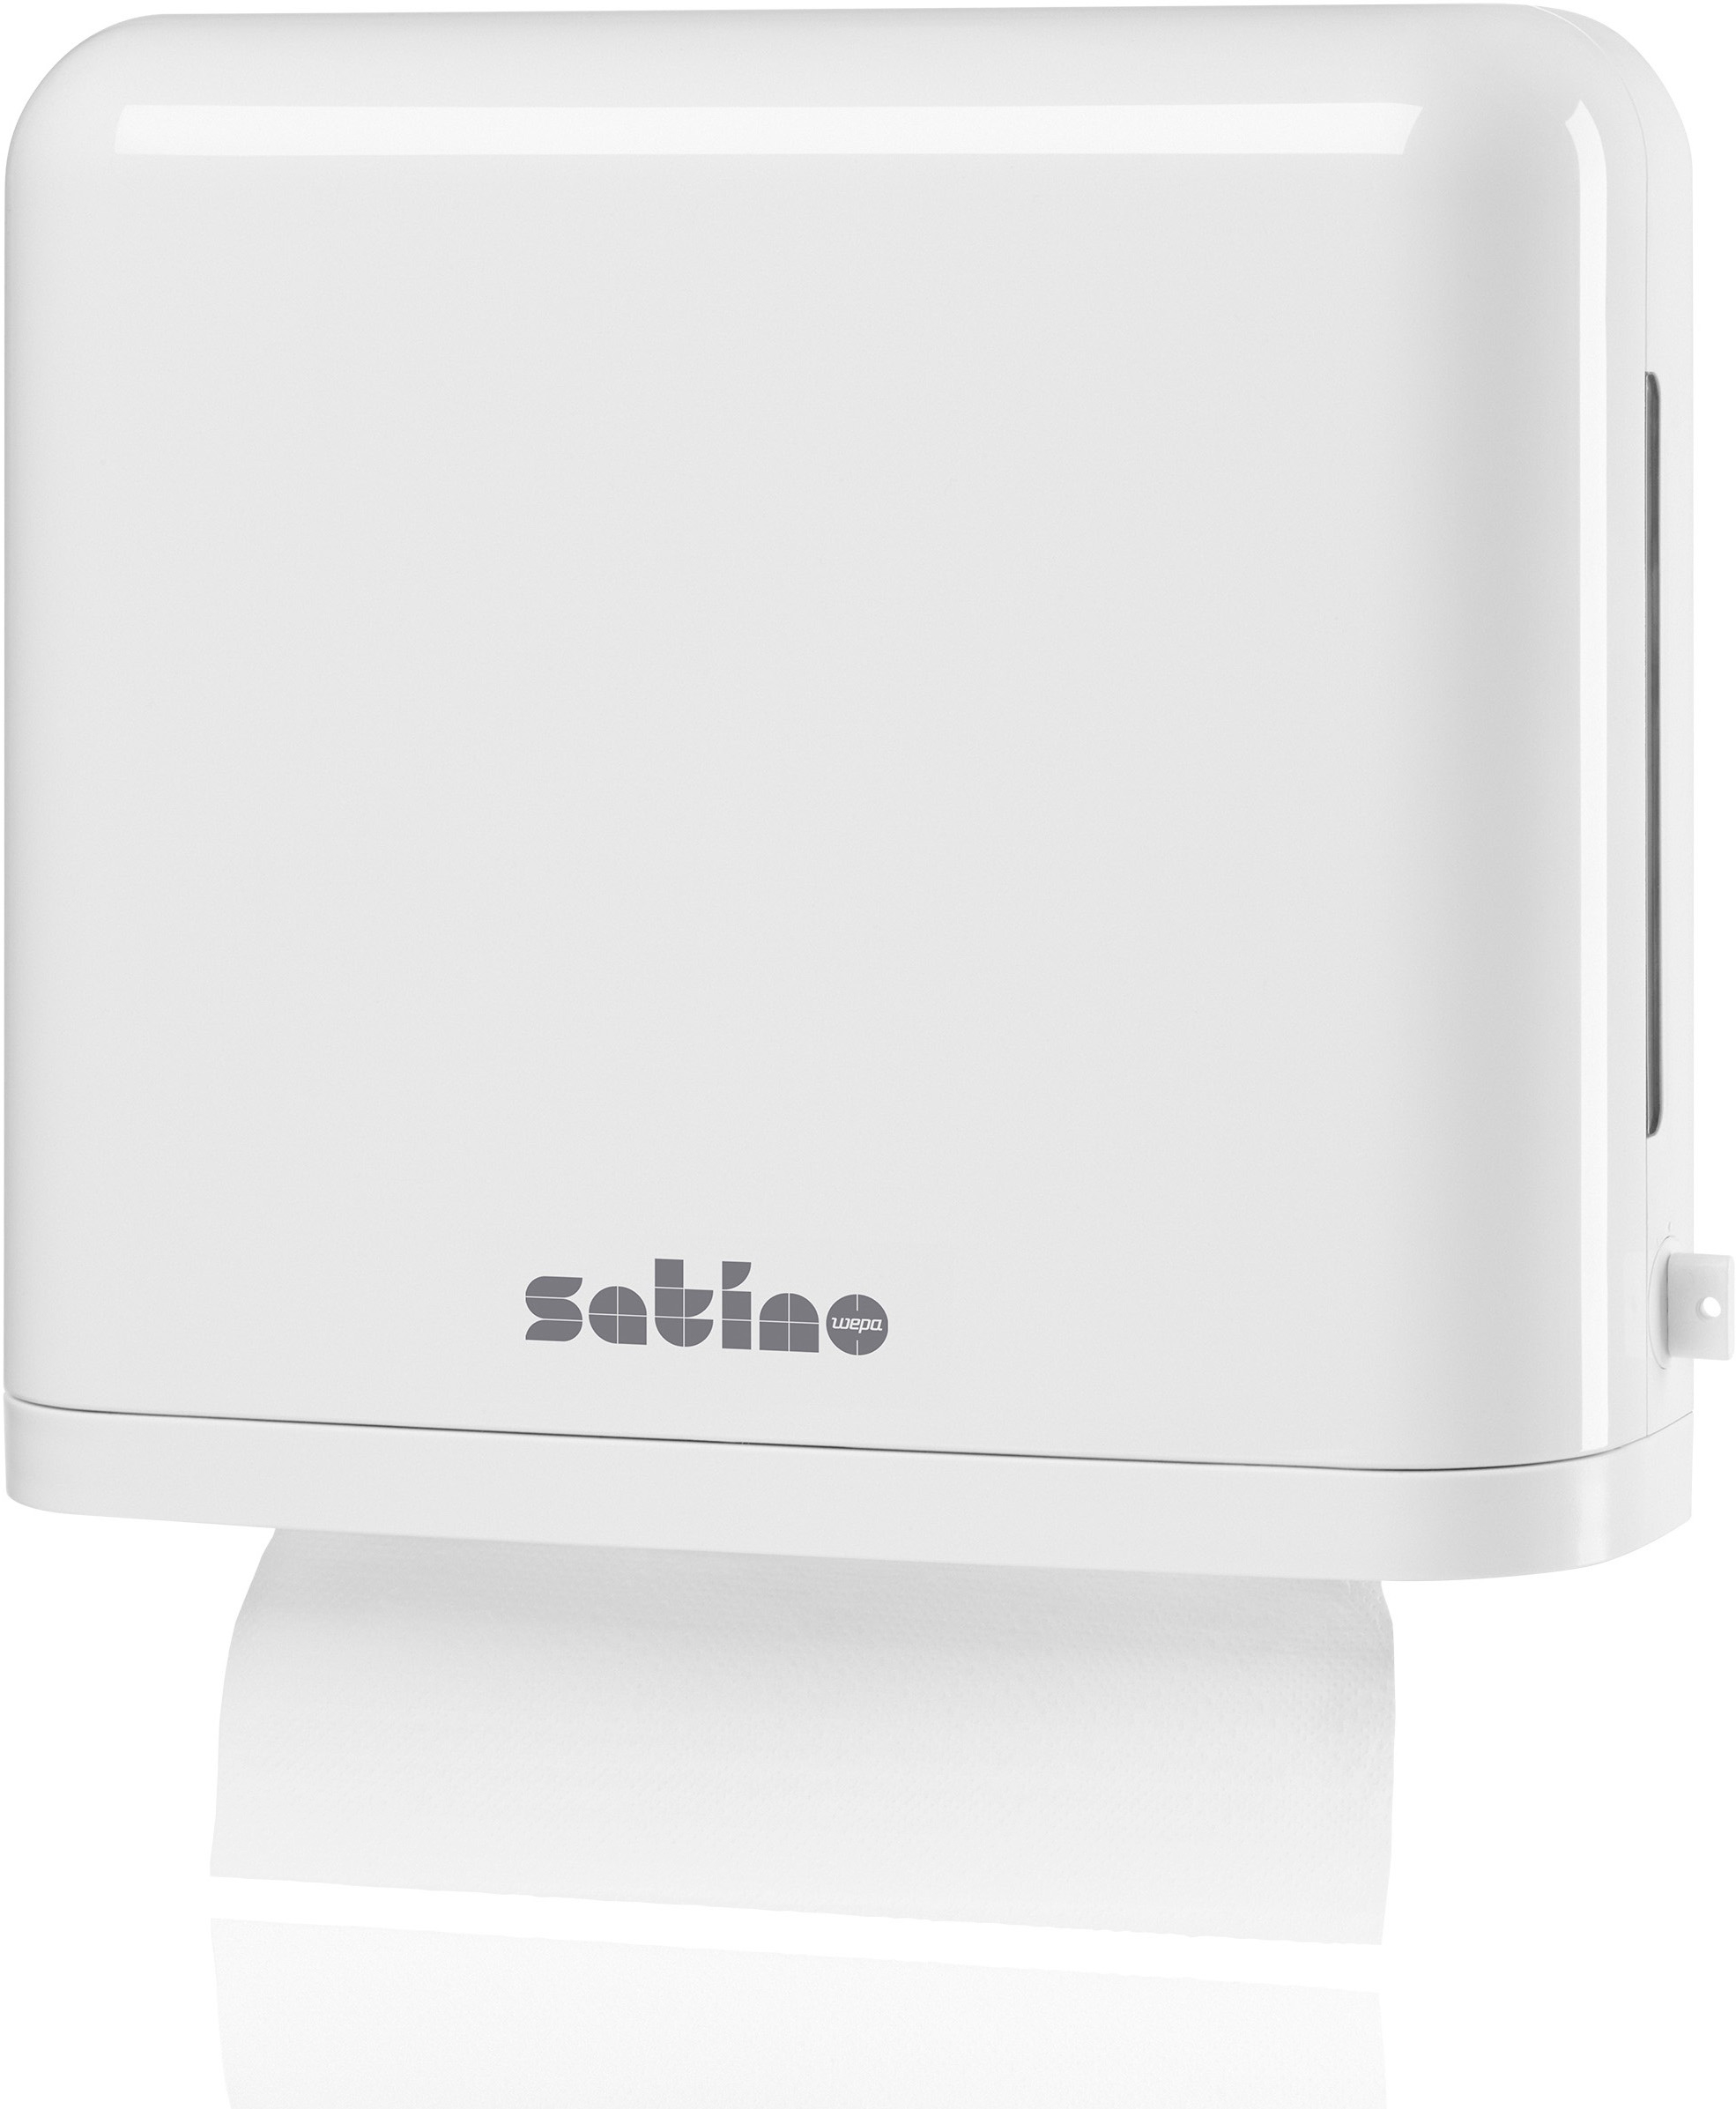 SATINO Distributeur essuie-main petit 331030 Interfold 327x283mm Interfold 327x283mm